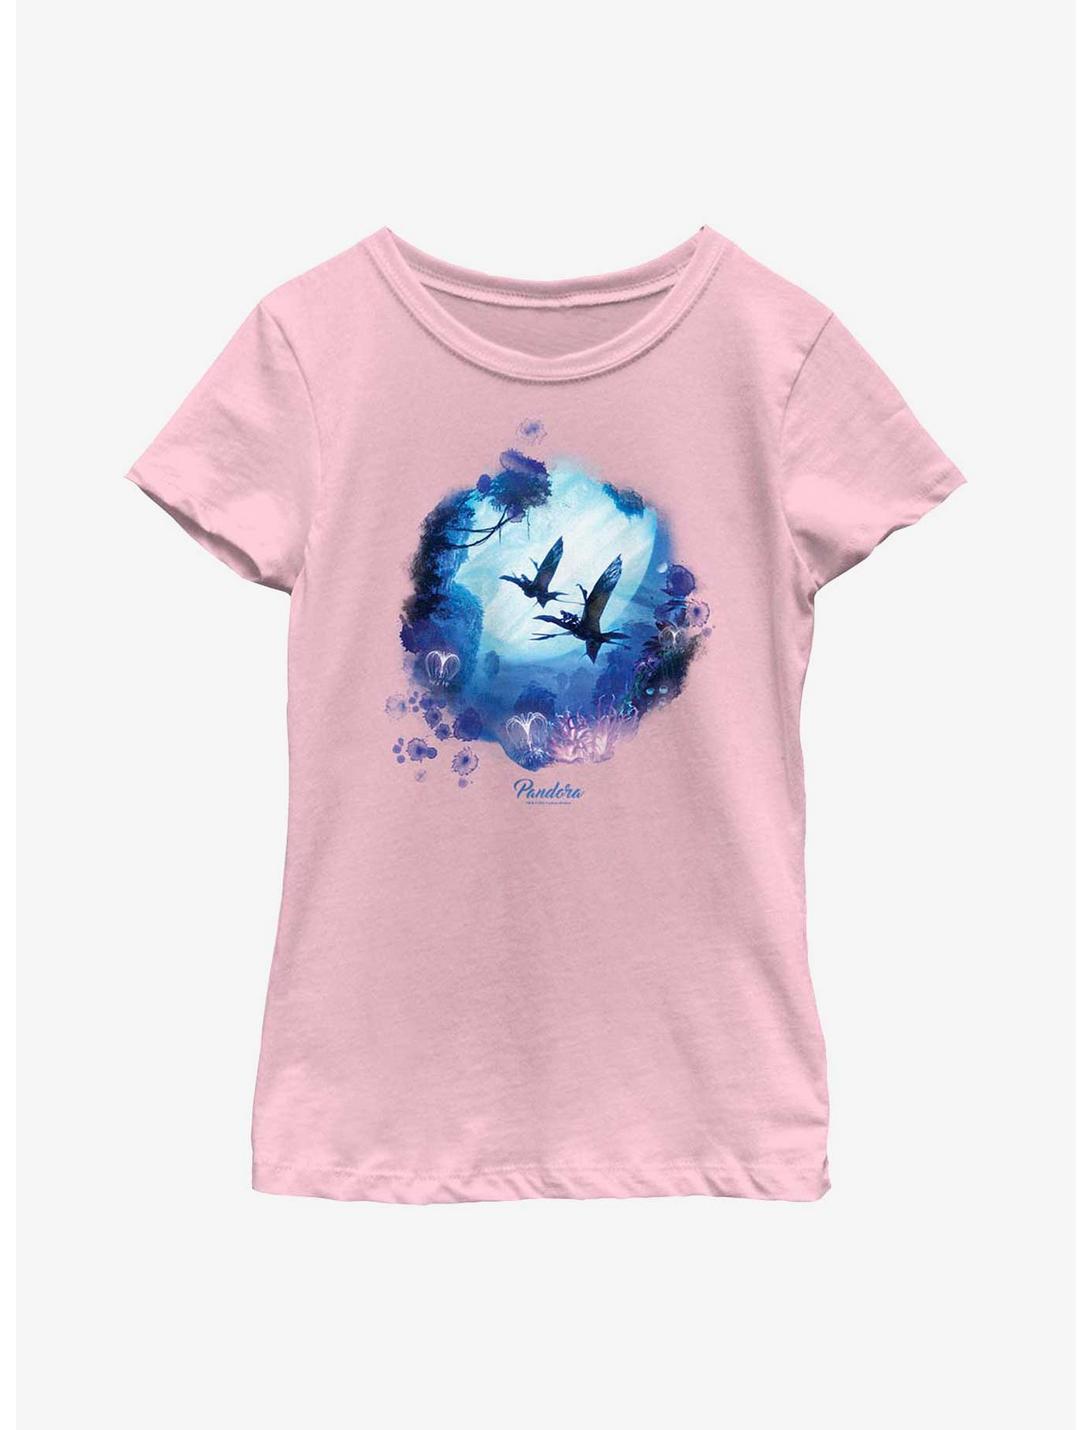 Avatar: The Way Of The Water Pandora Moon Youth Girls T-Shirt, PINK, hi-res